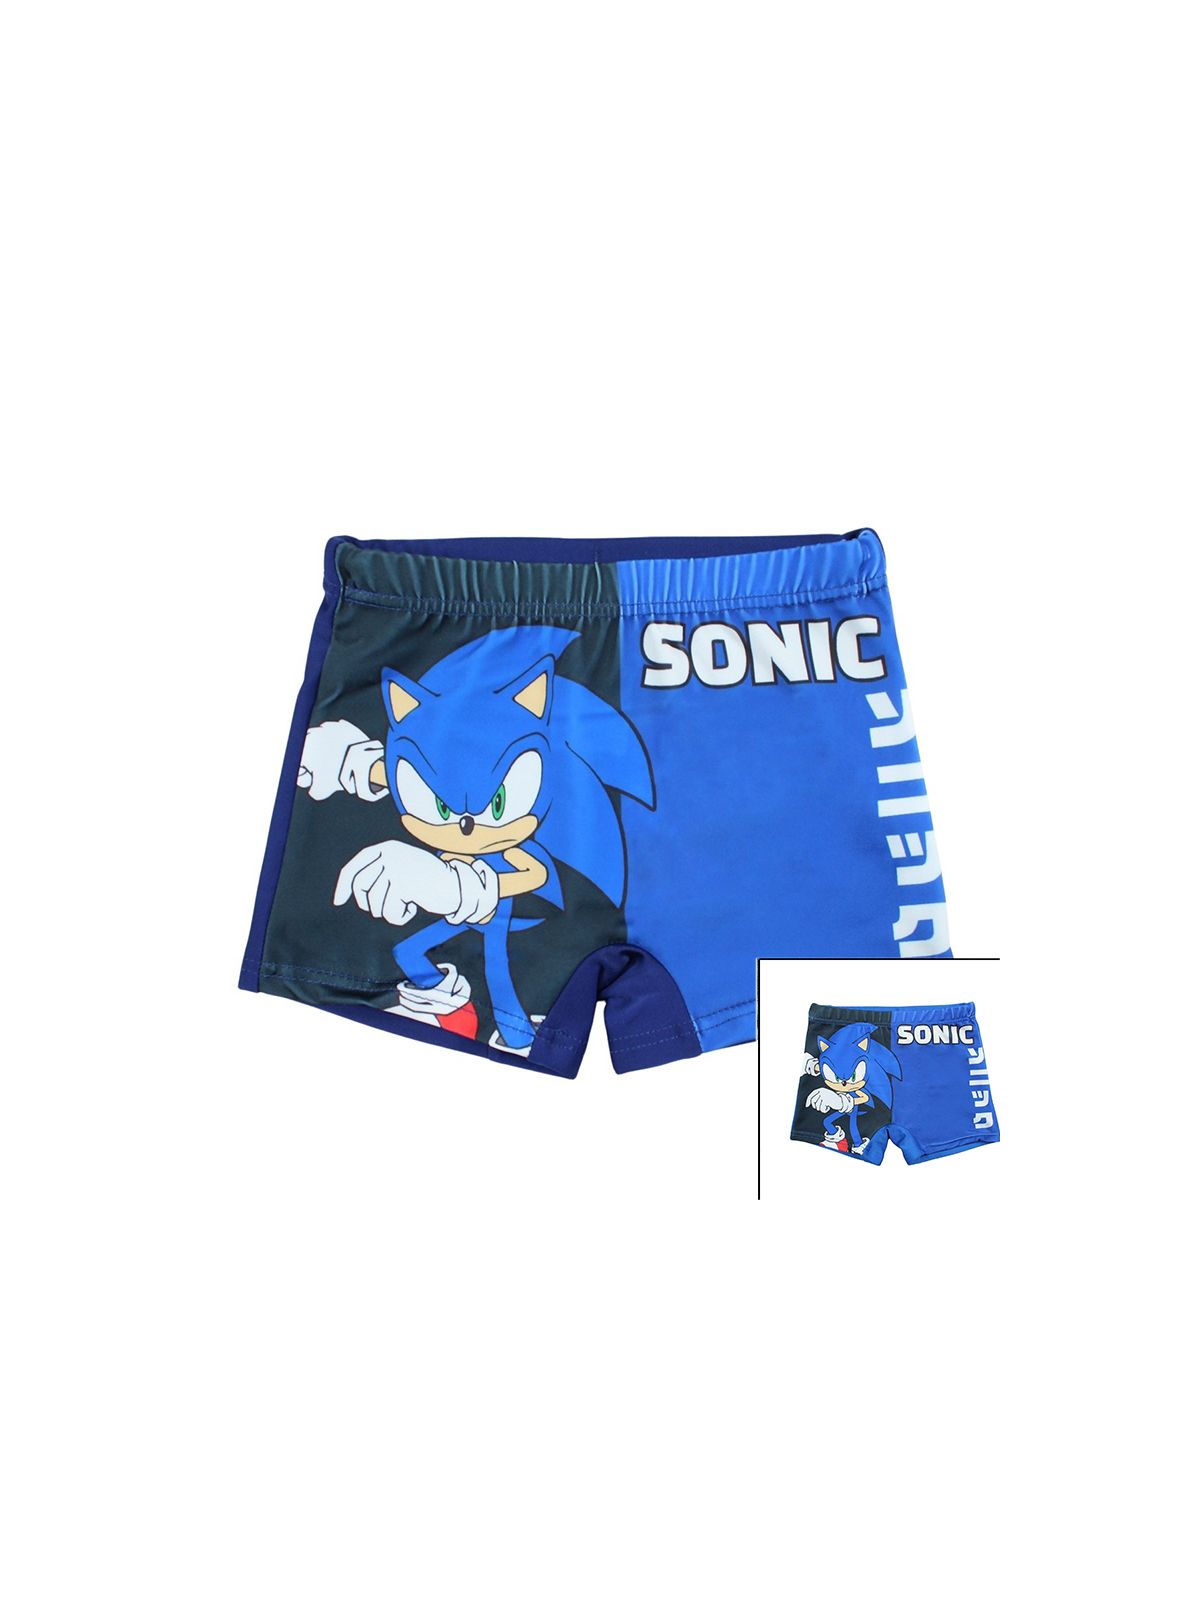 Sonic swim trunks.